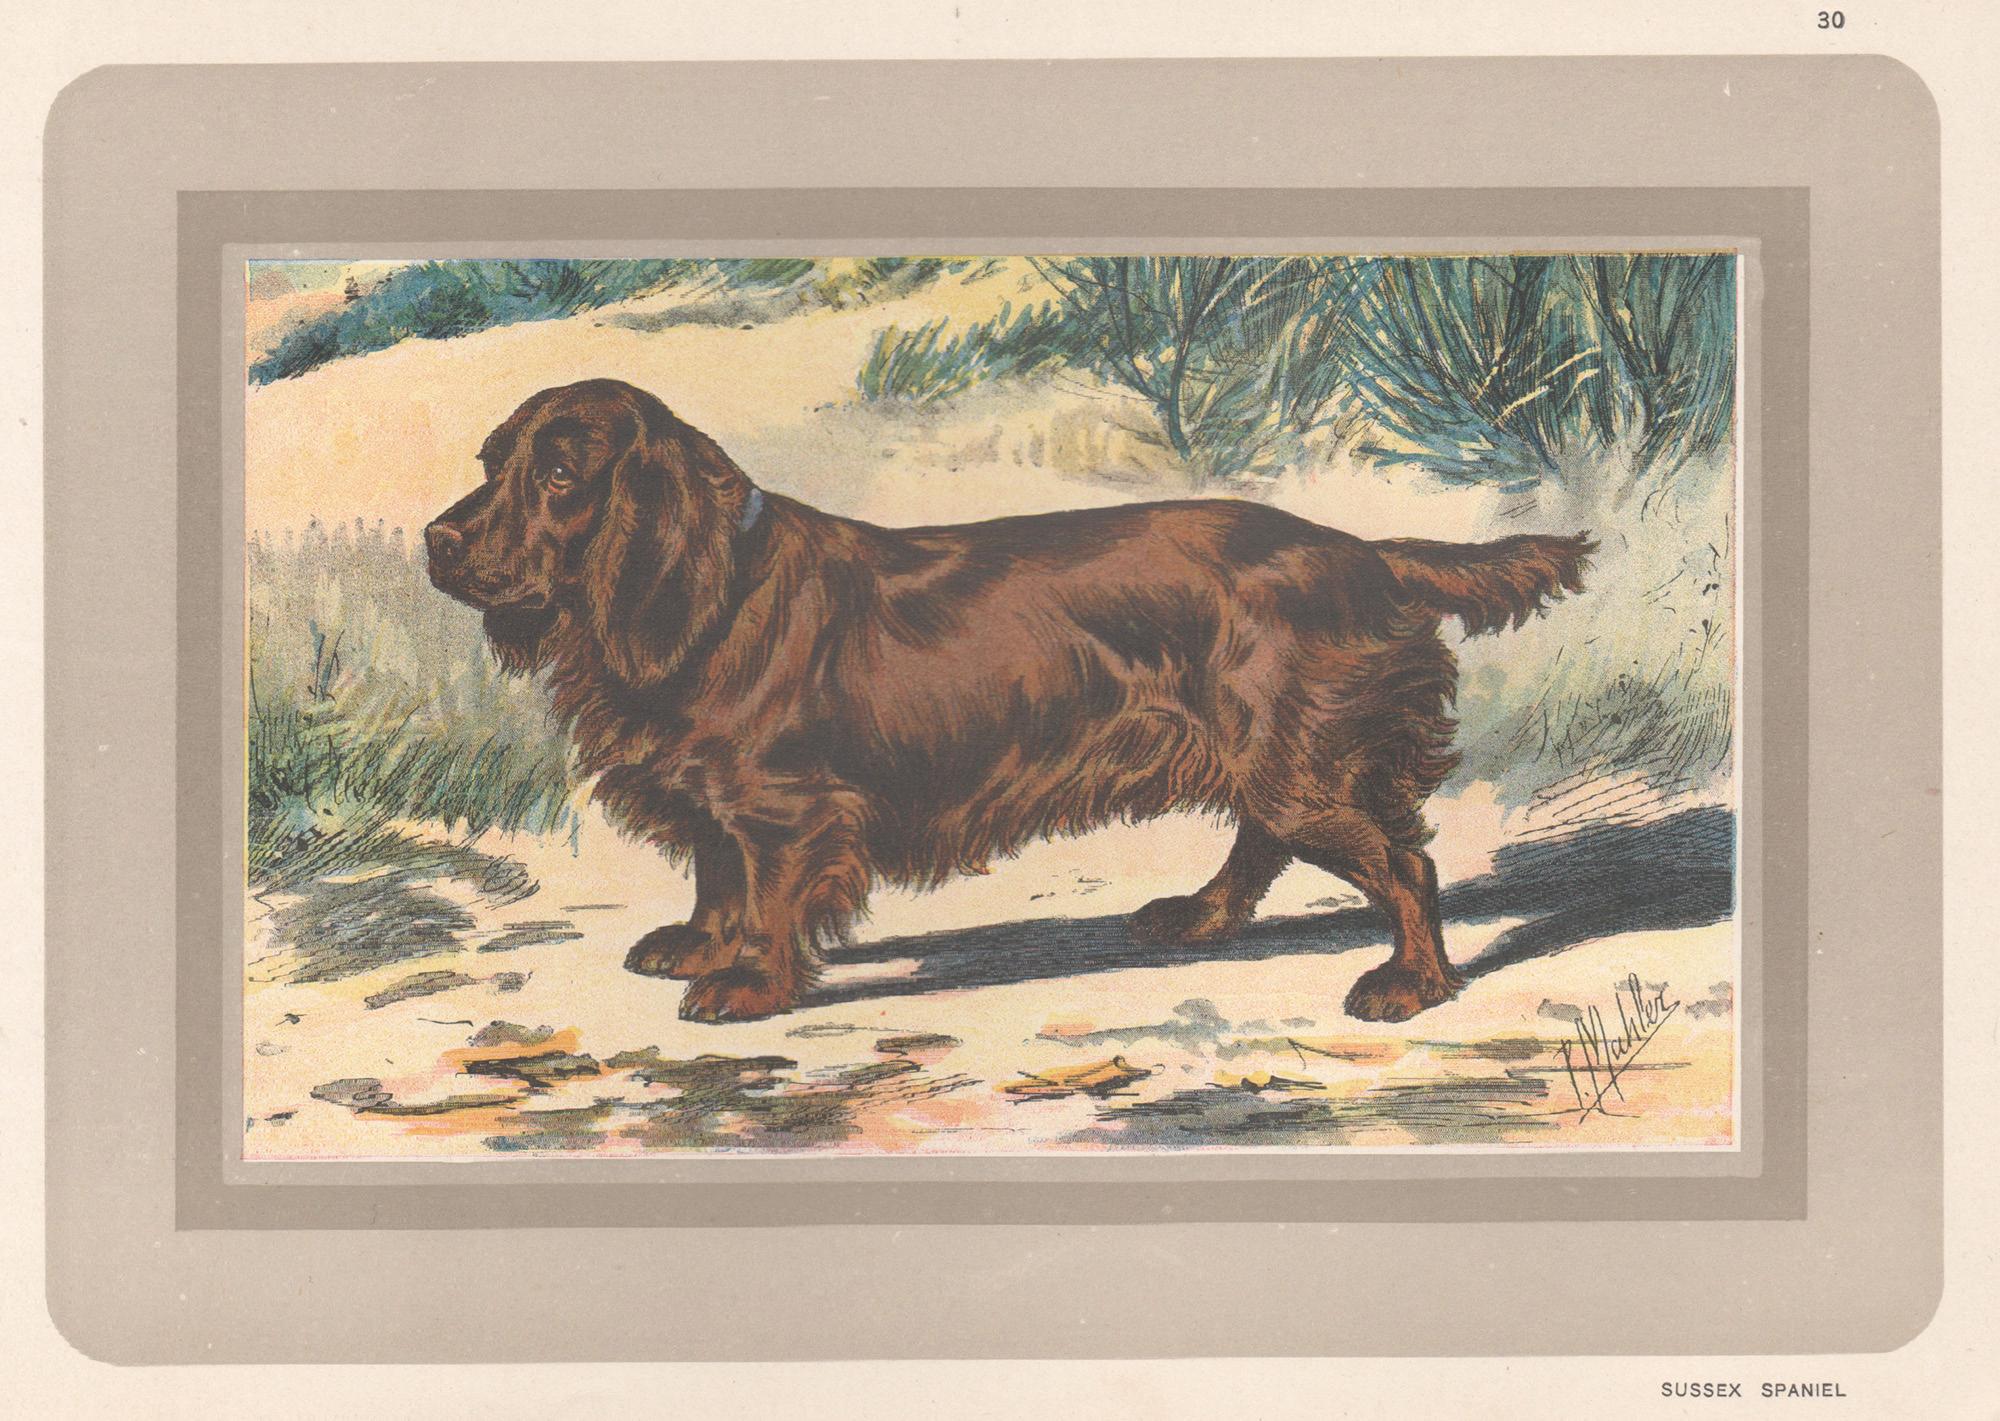 P. Mahler Animal Print - Sussex Spaniel, French hound dog chromolithograph print, 1931